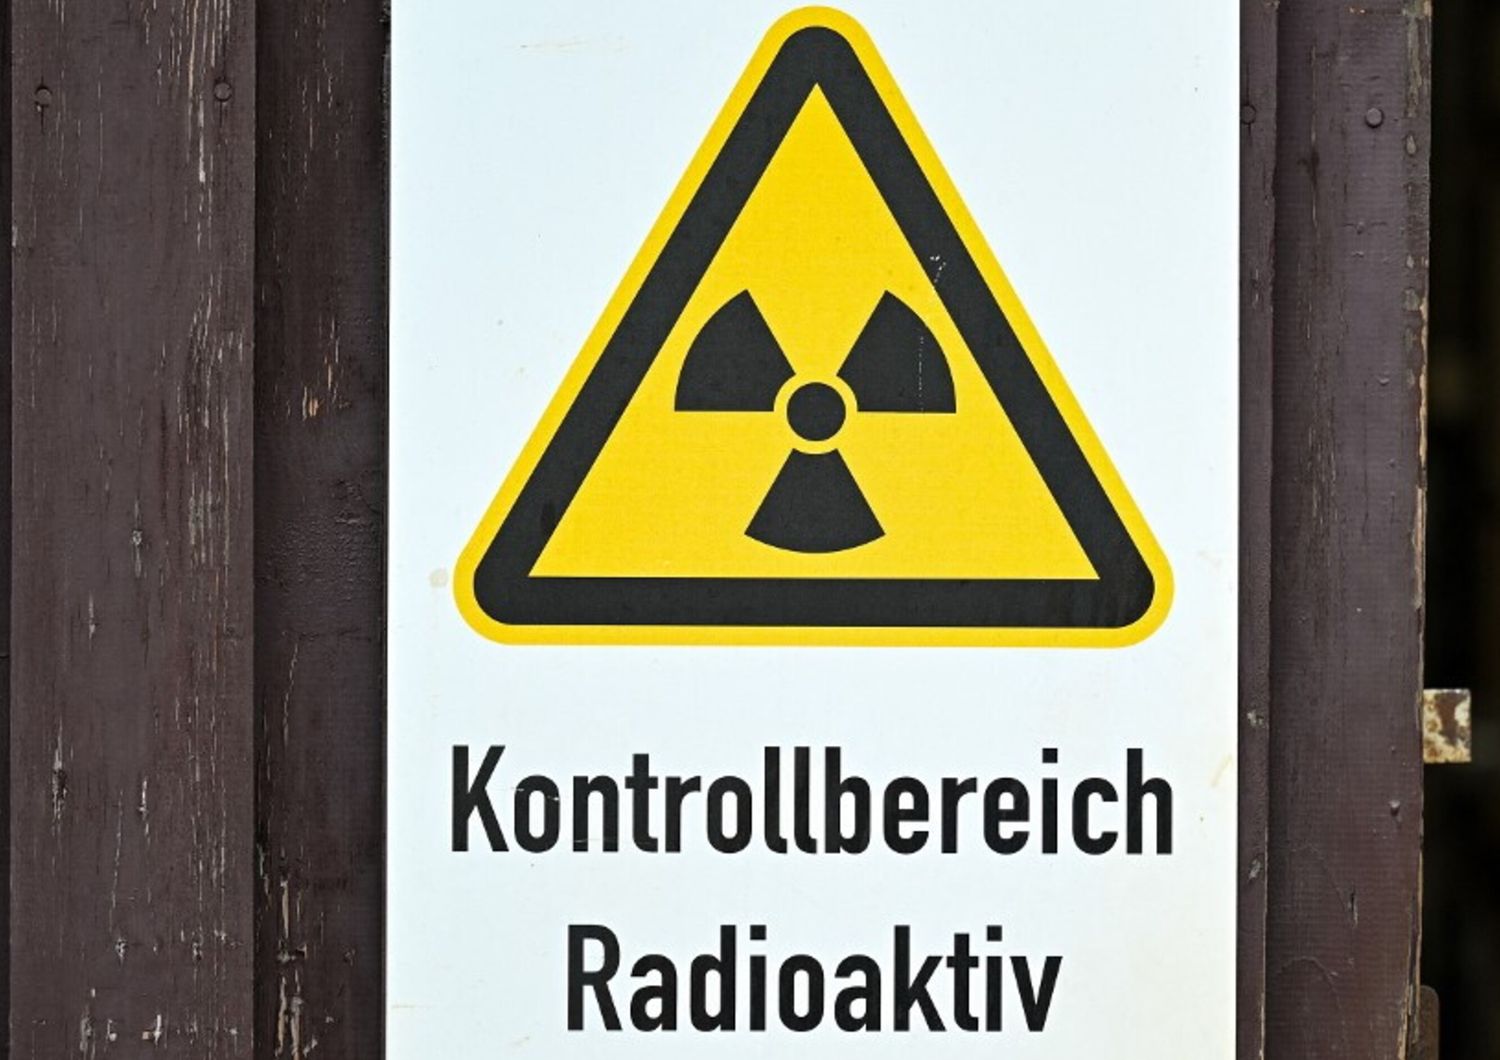 Zona radioattiva